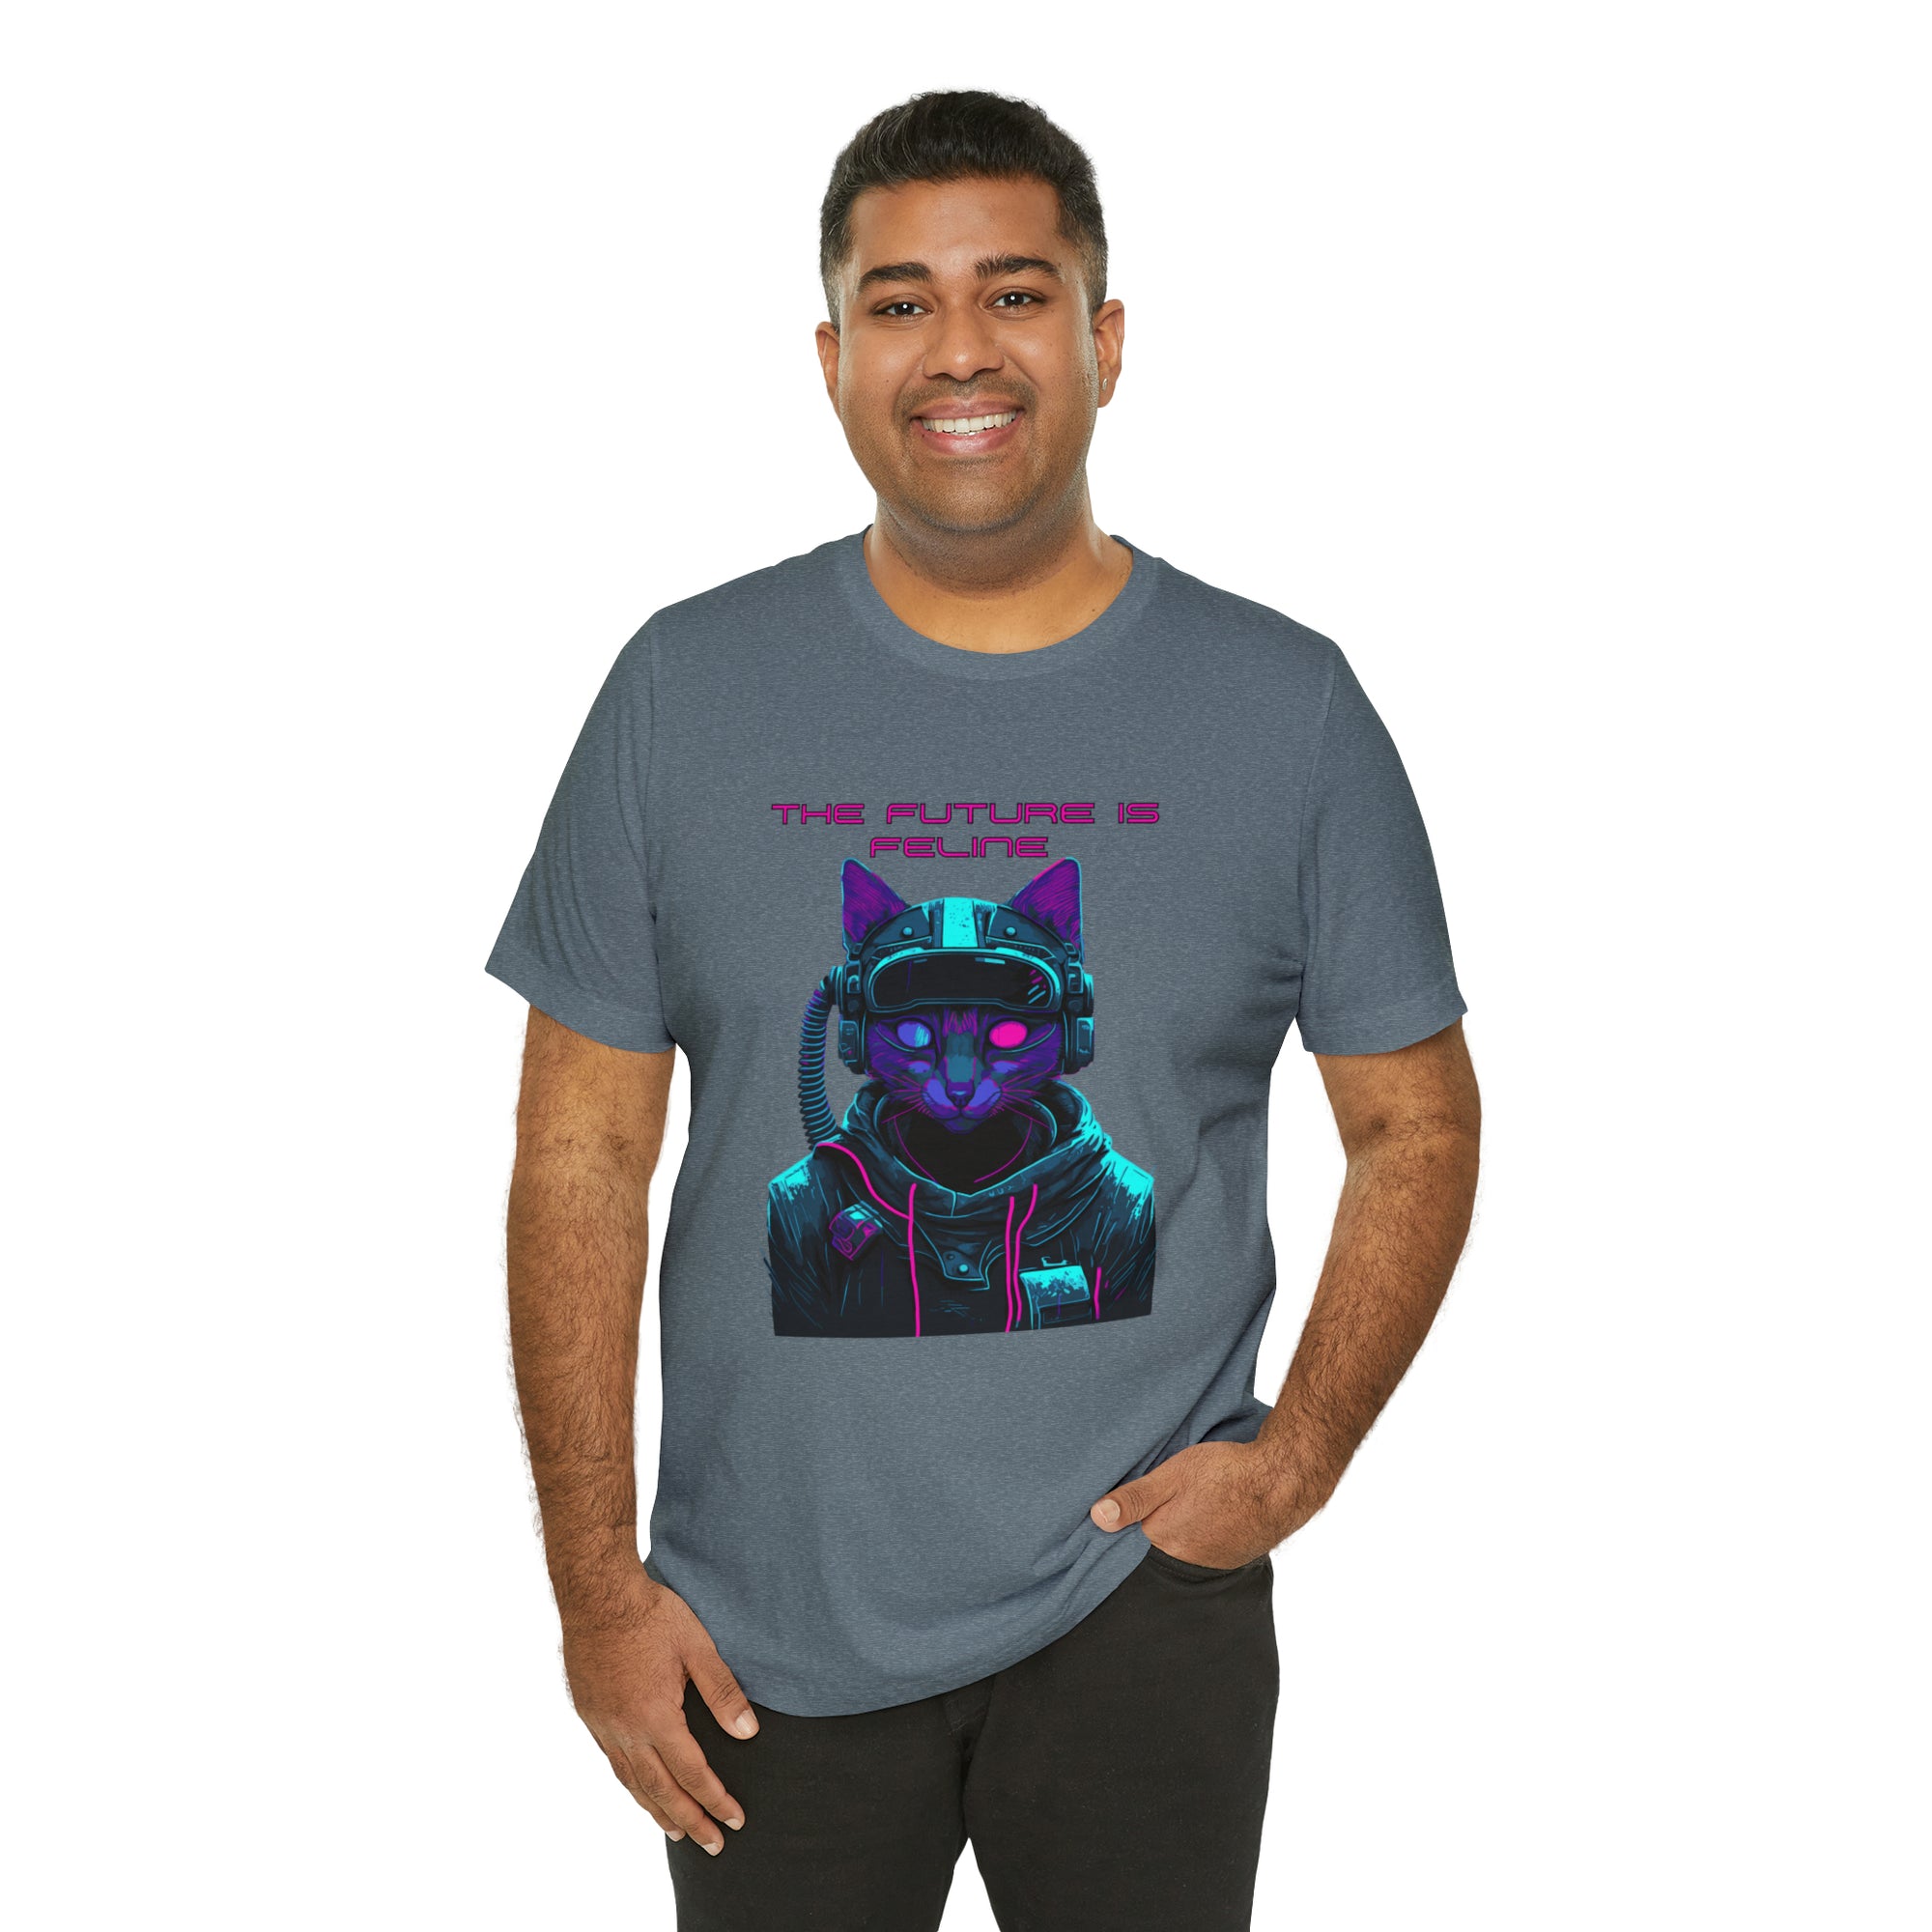 The Future Is Feline - T-Shirt